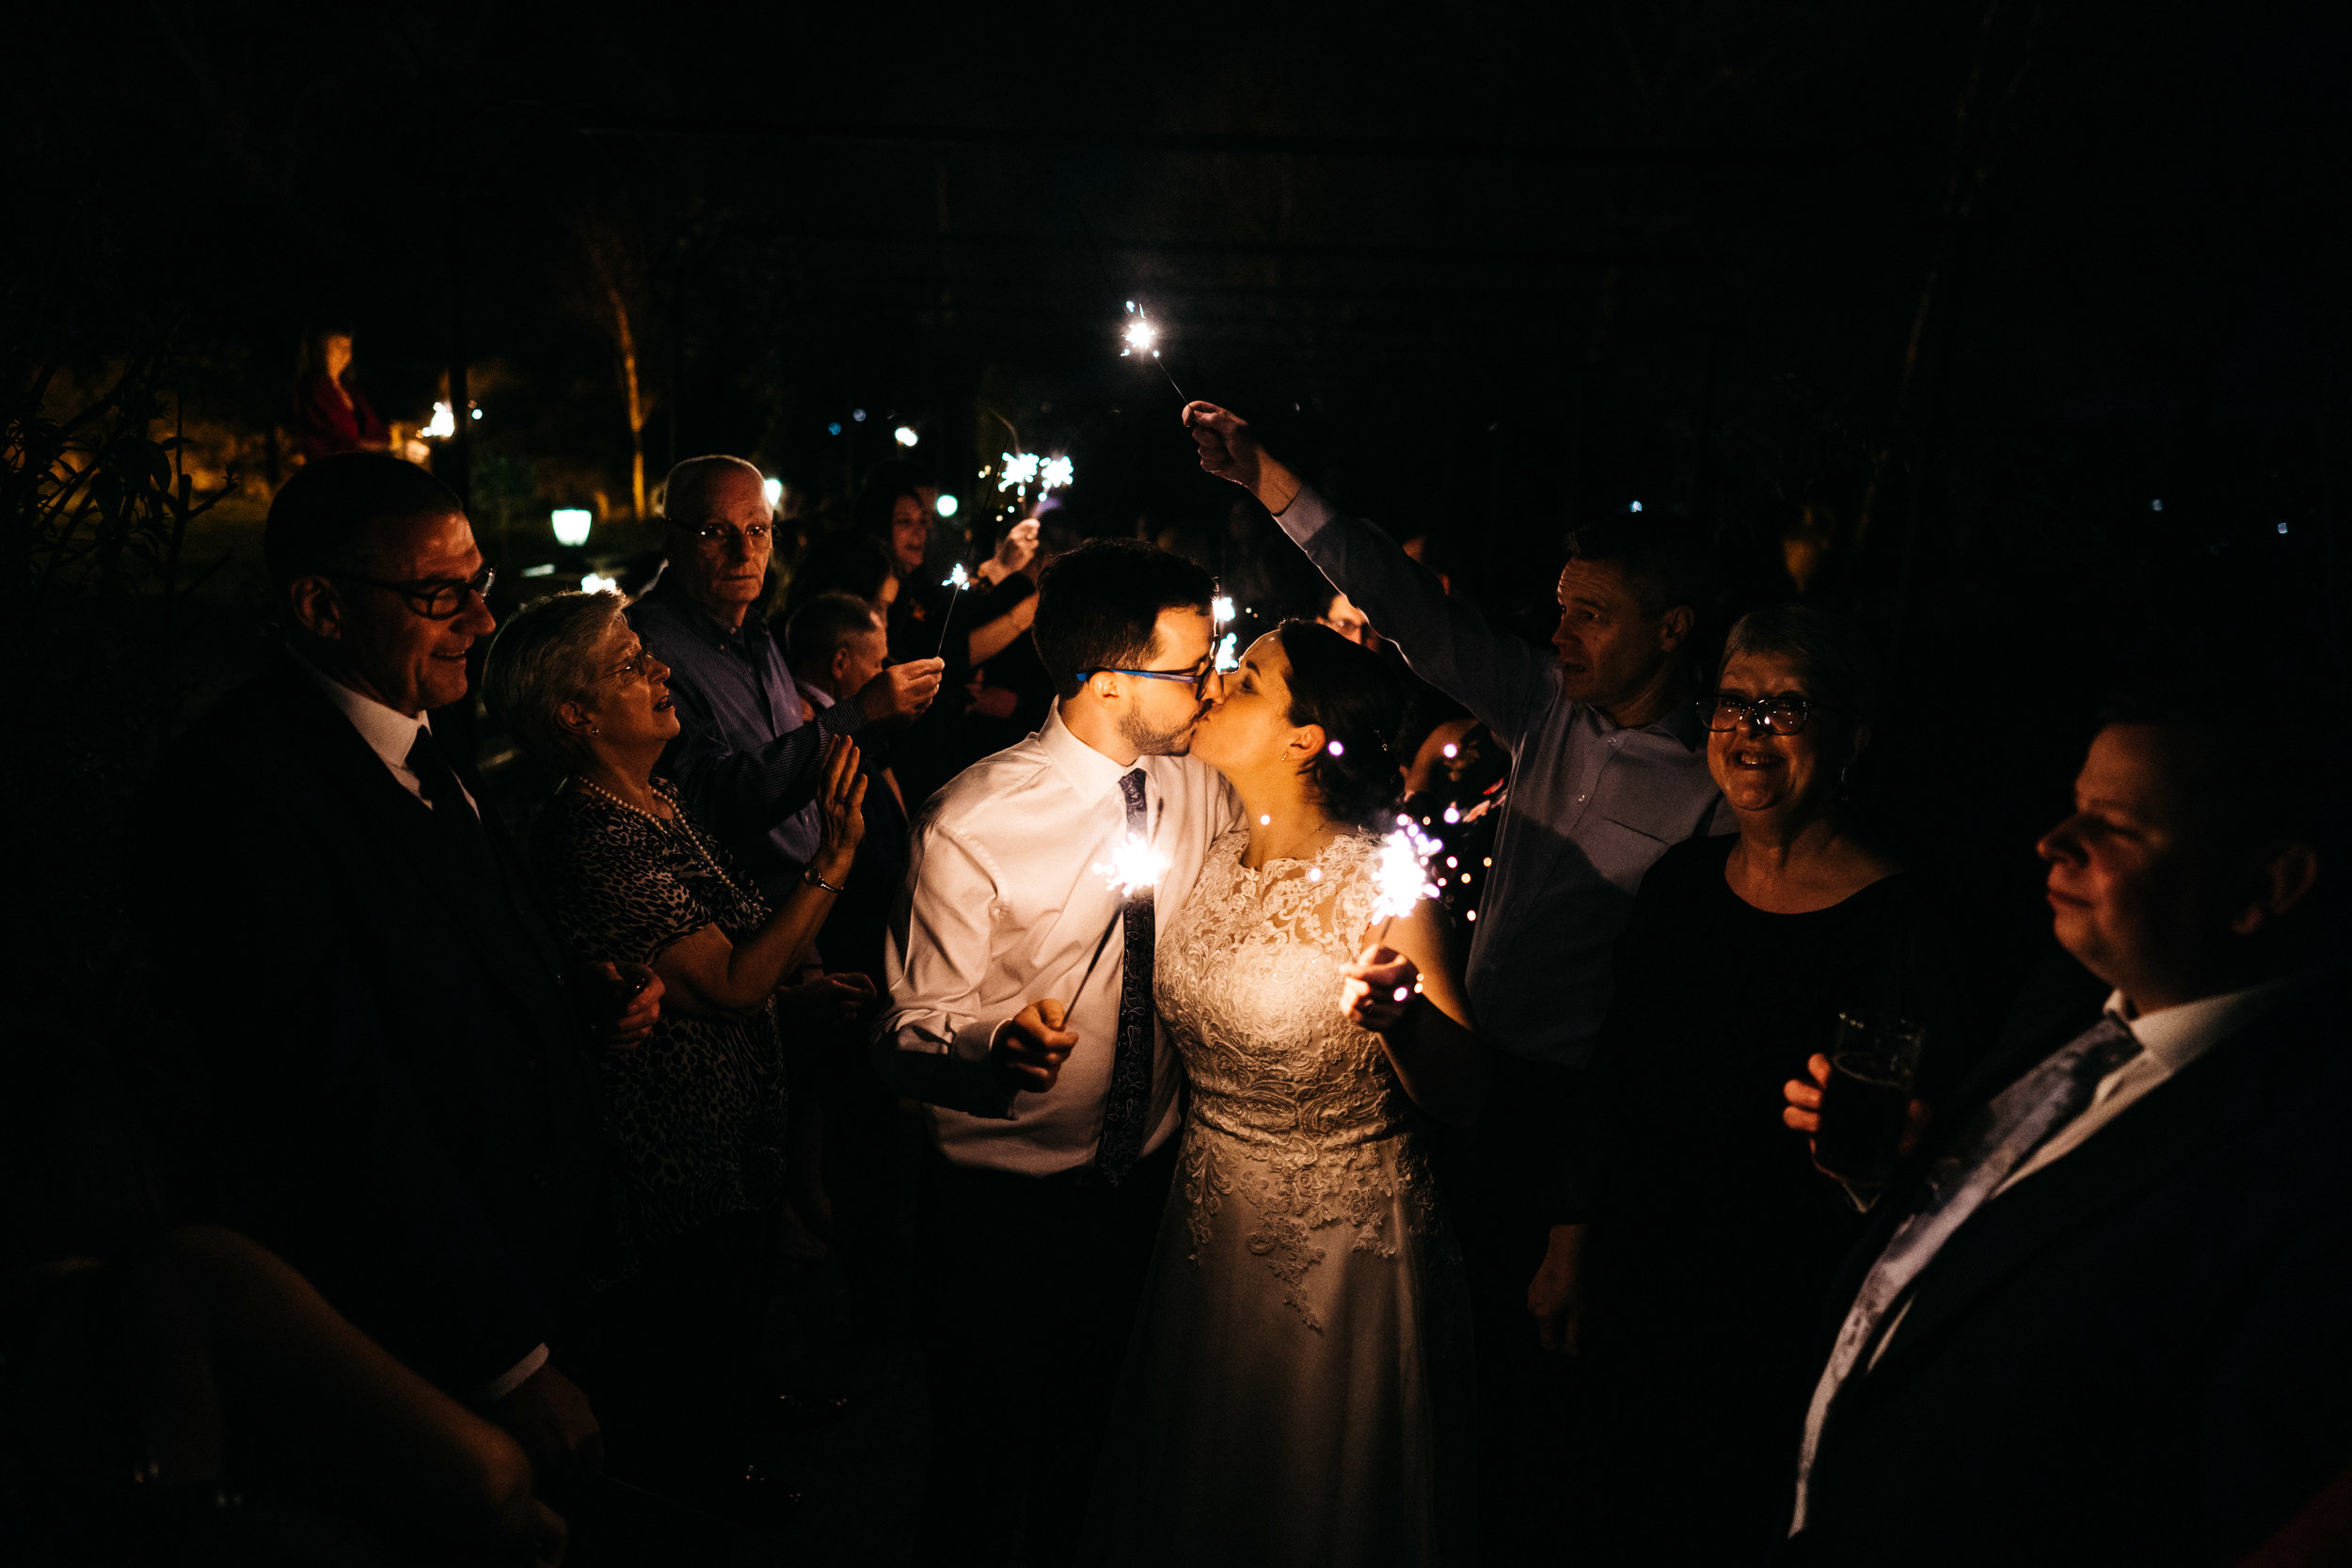 Wedding sparklers